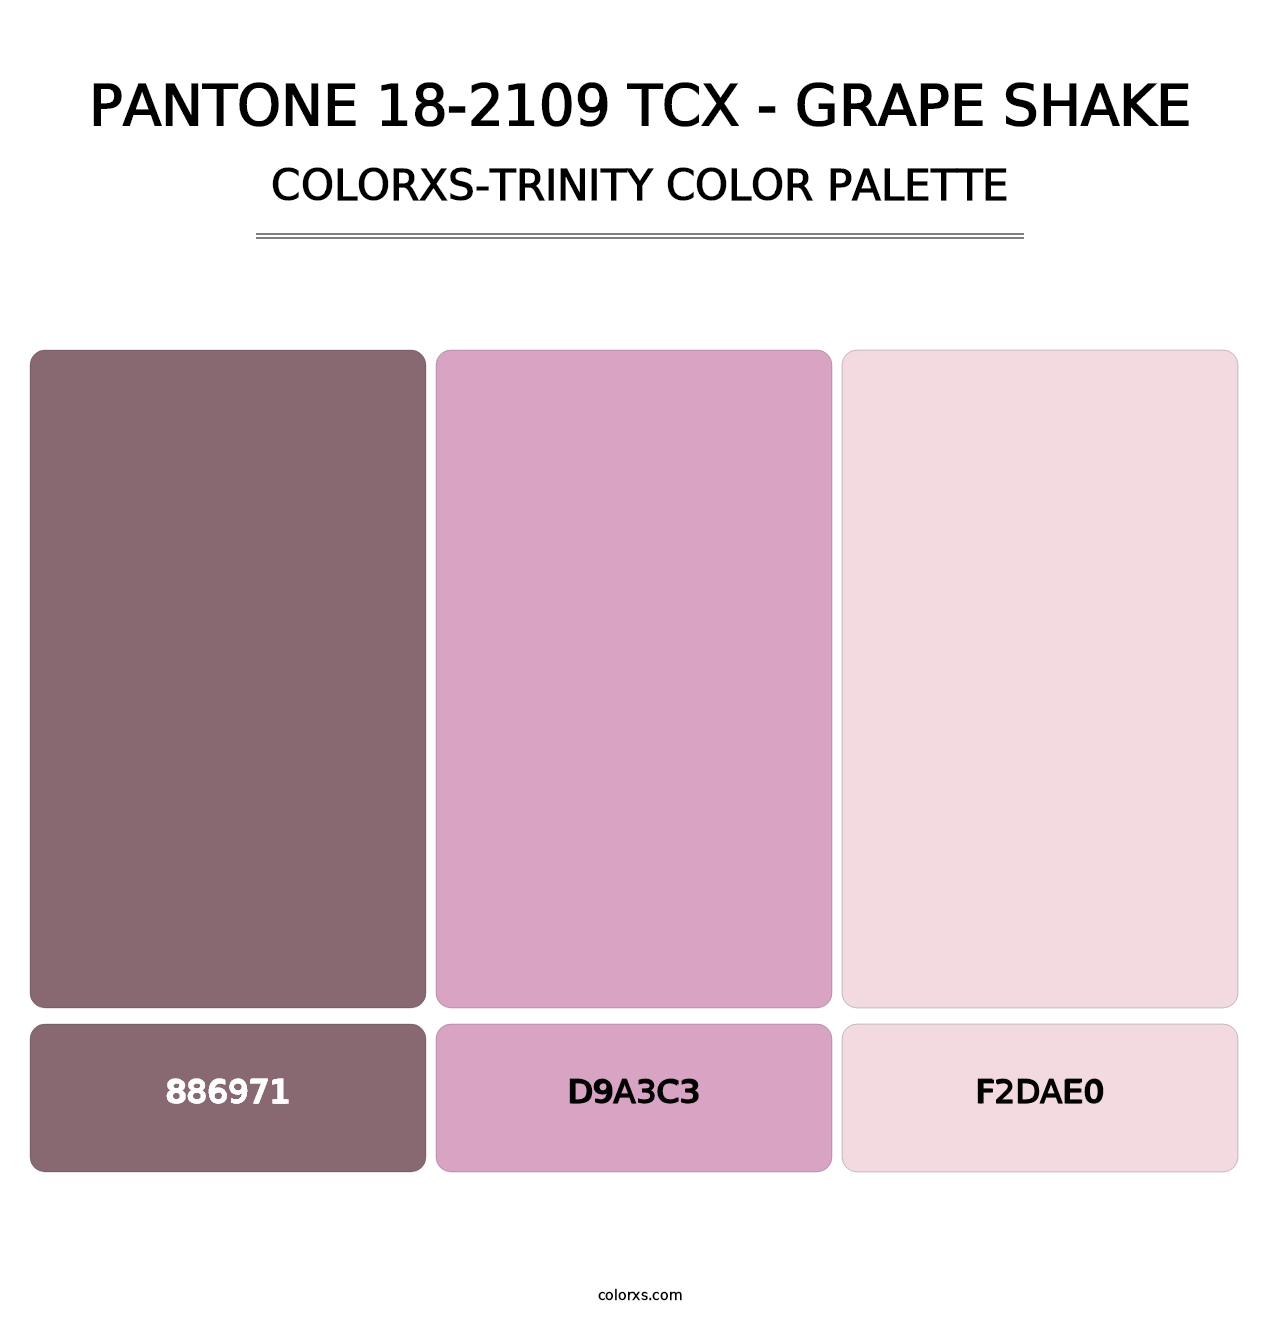 PANTONE 18-2109 TCX - Grape Shake - Colorxs Trinity Palette